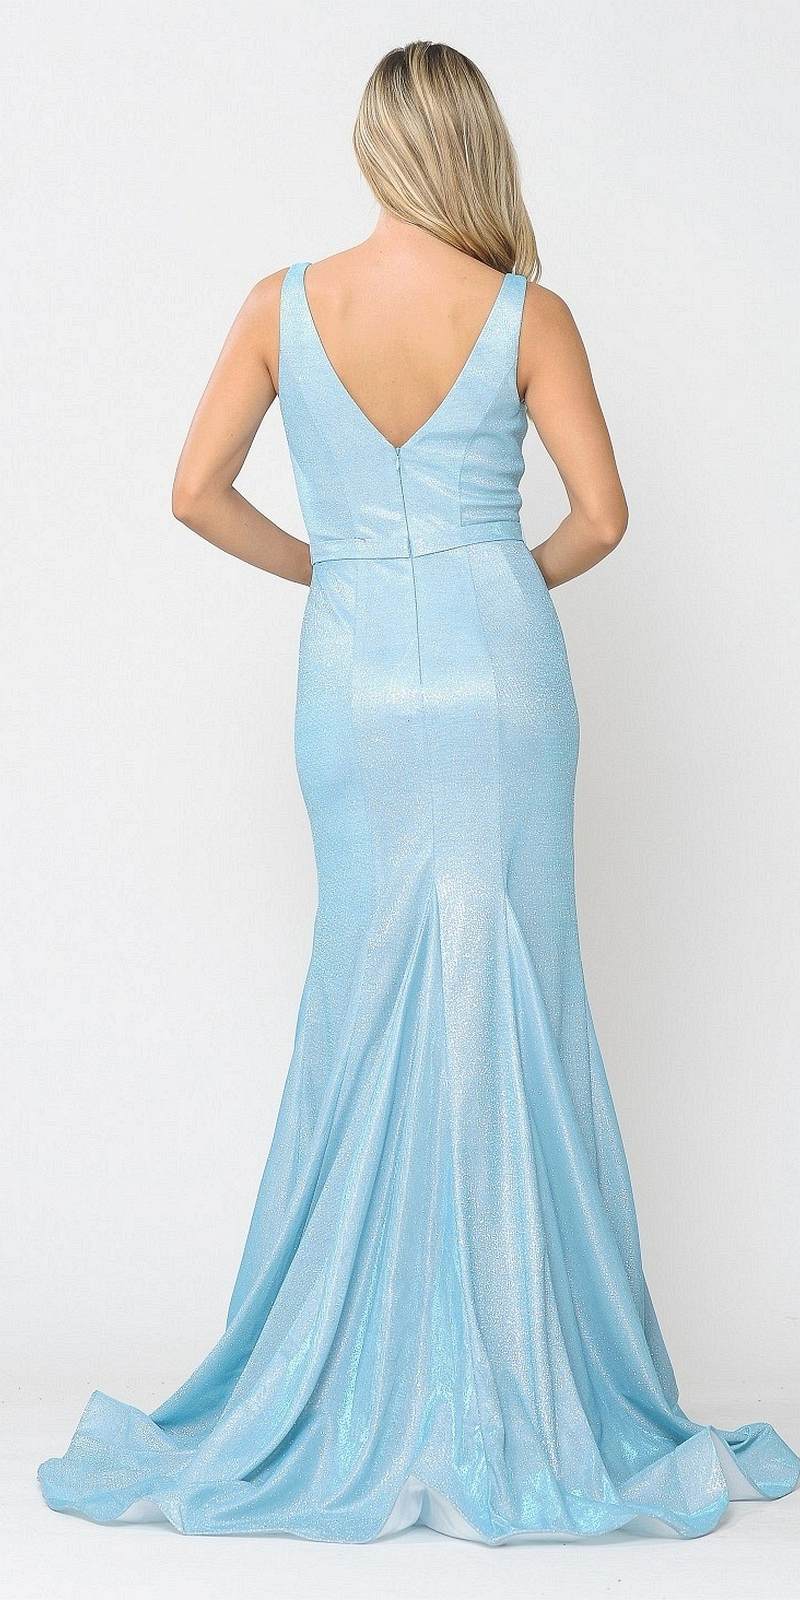 Poly USA 8704 Blue Mermaid Style Long Prom Dress Sleeveless